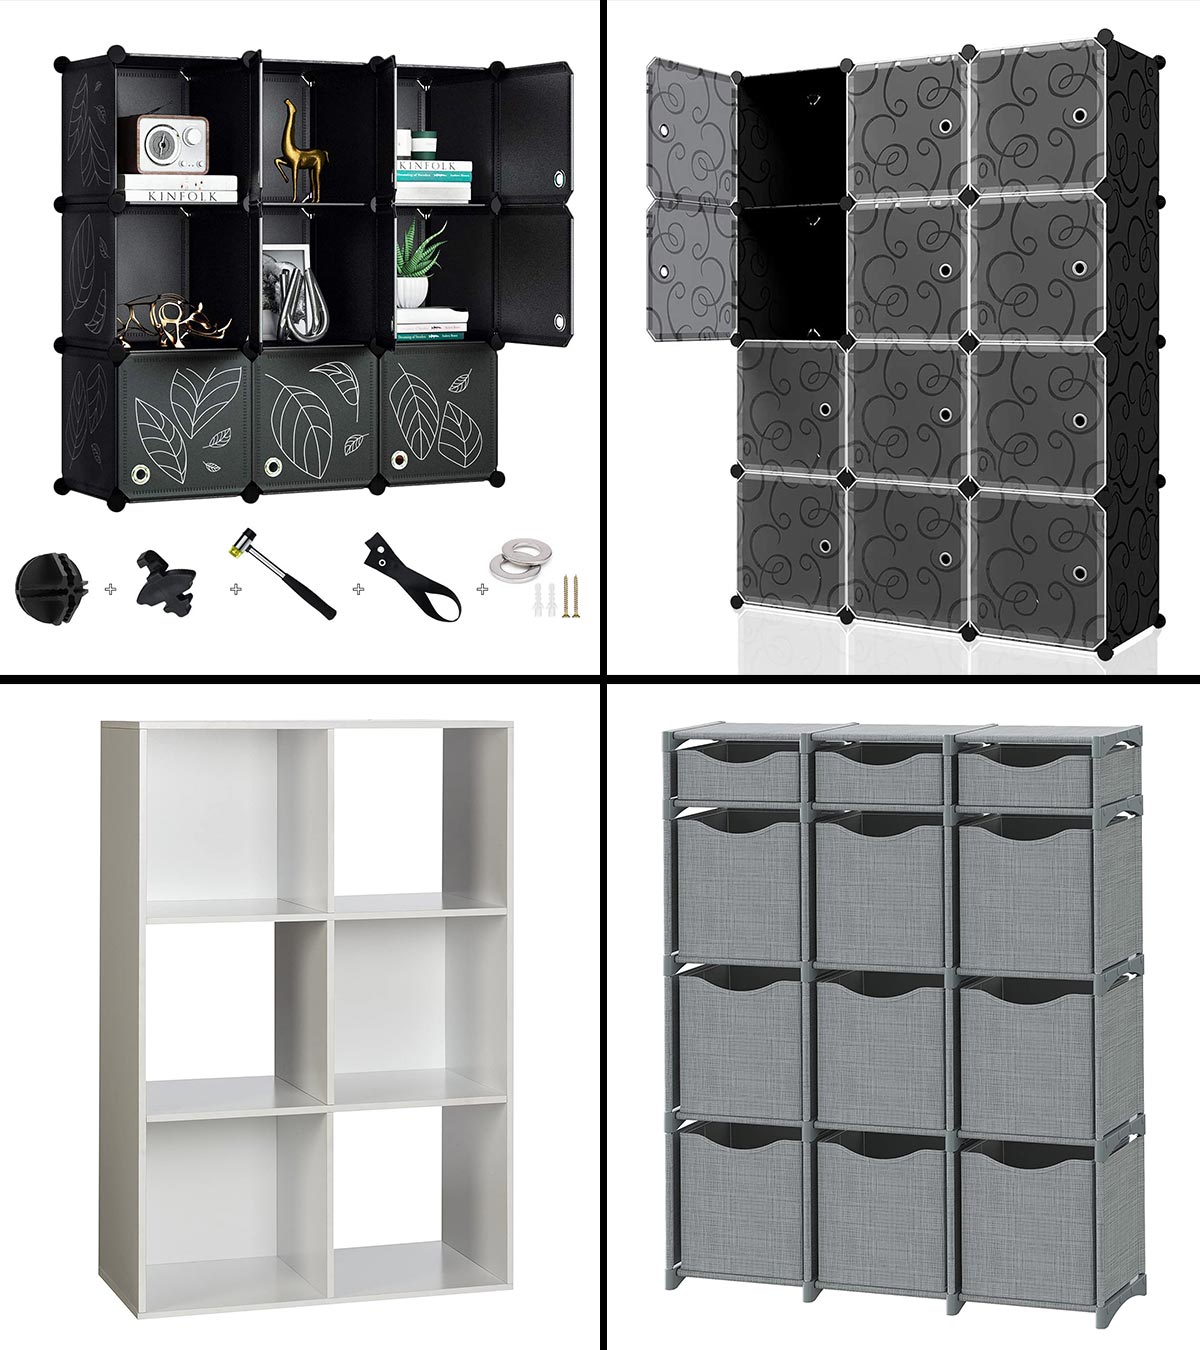 https://www.momjunction.com/wp-content/uploads/2020/12/13-Best-Cube-Storage-Organizers-Banner-MJ.jpg